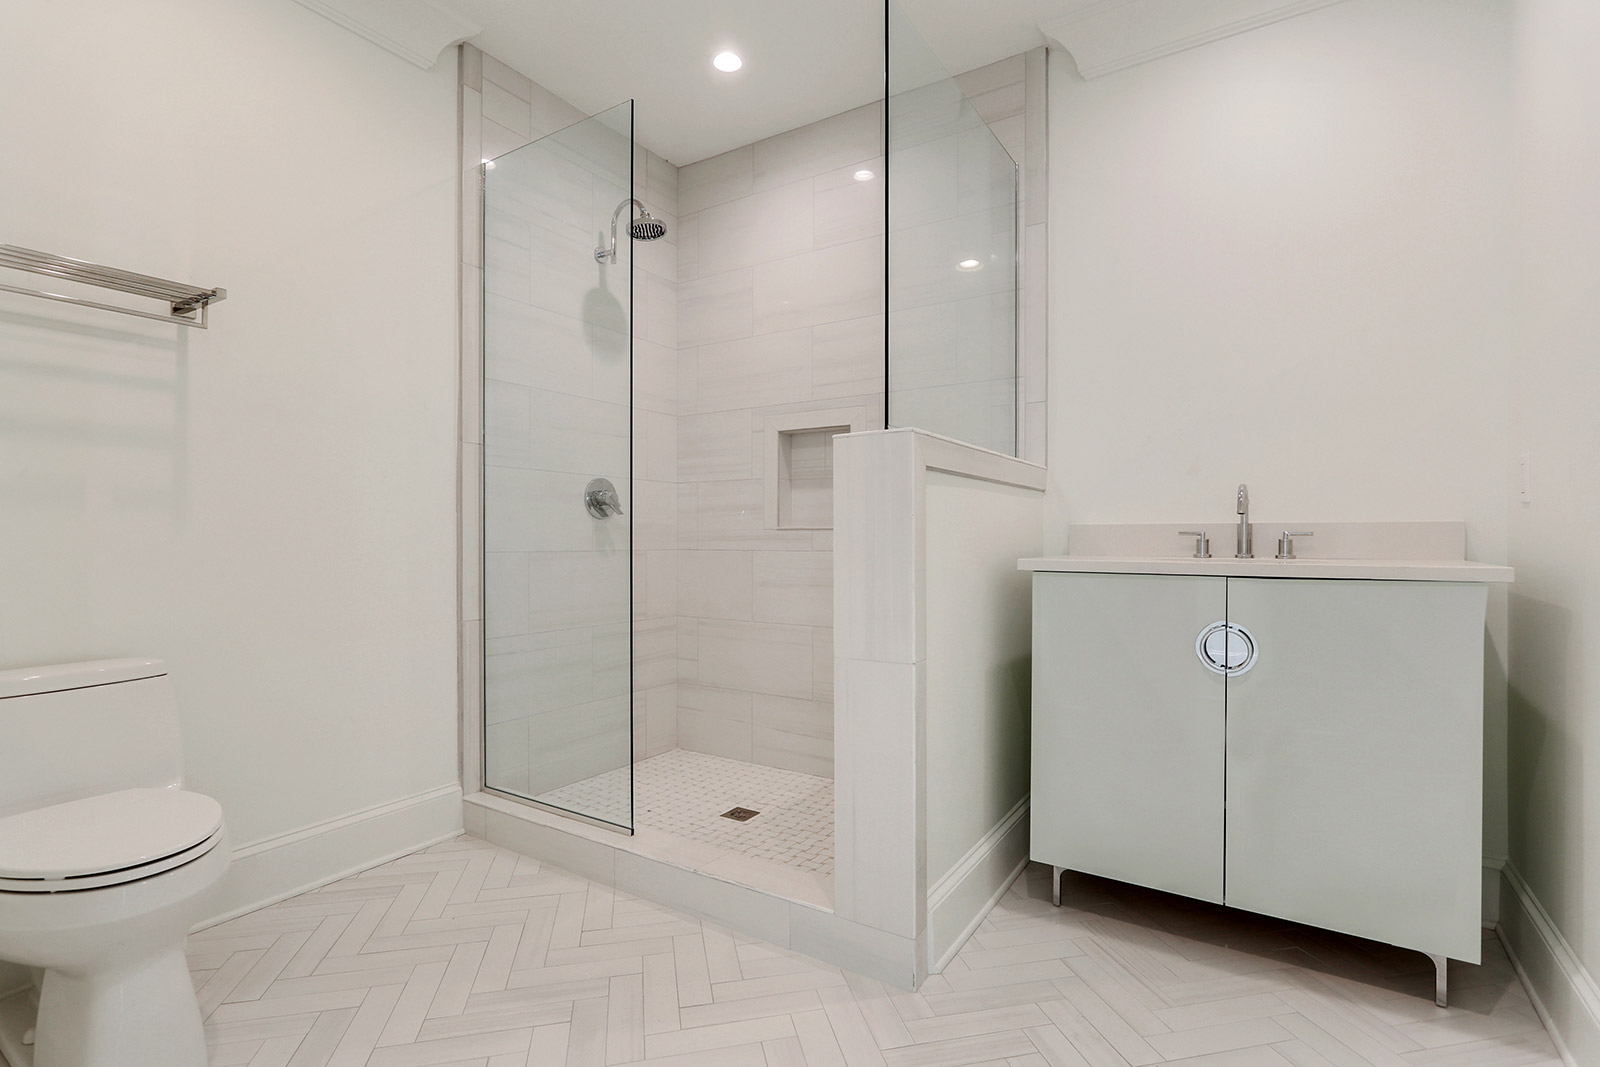 Home Addition Bathroom designed and built by DMG Design+Build